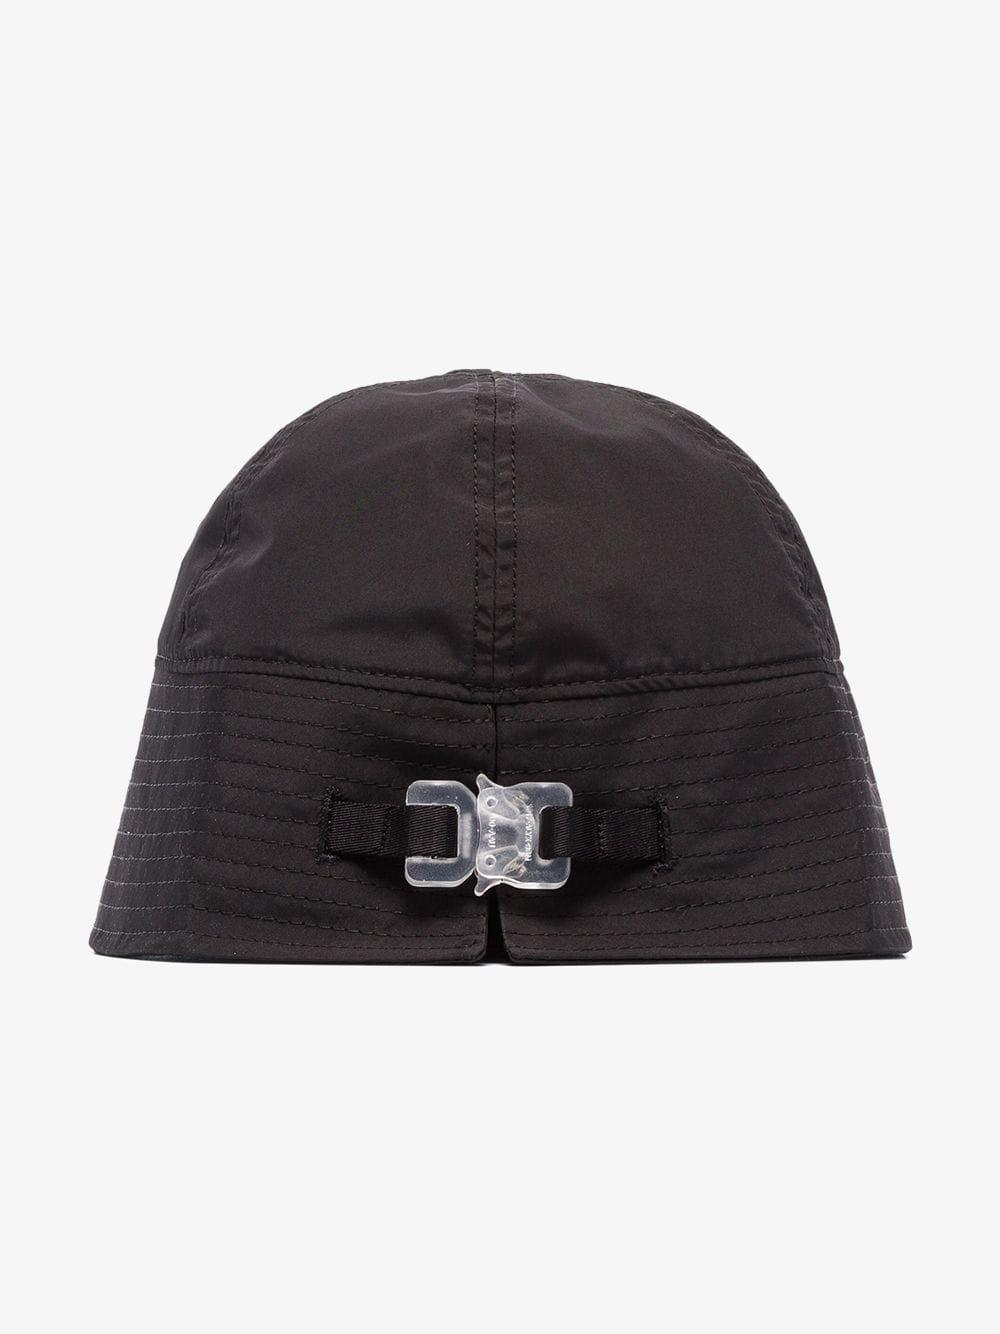 1017 ALYX 9SM Sign Buckle Bucket Hat in Black for Men - Lyst